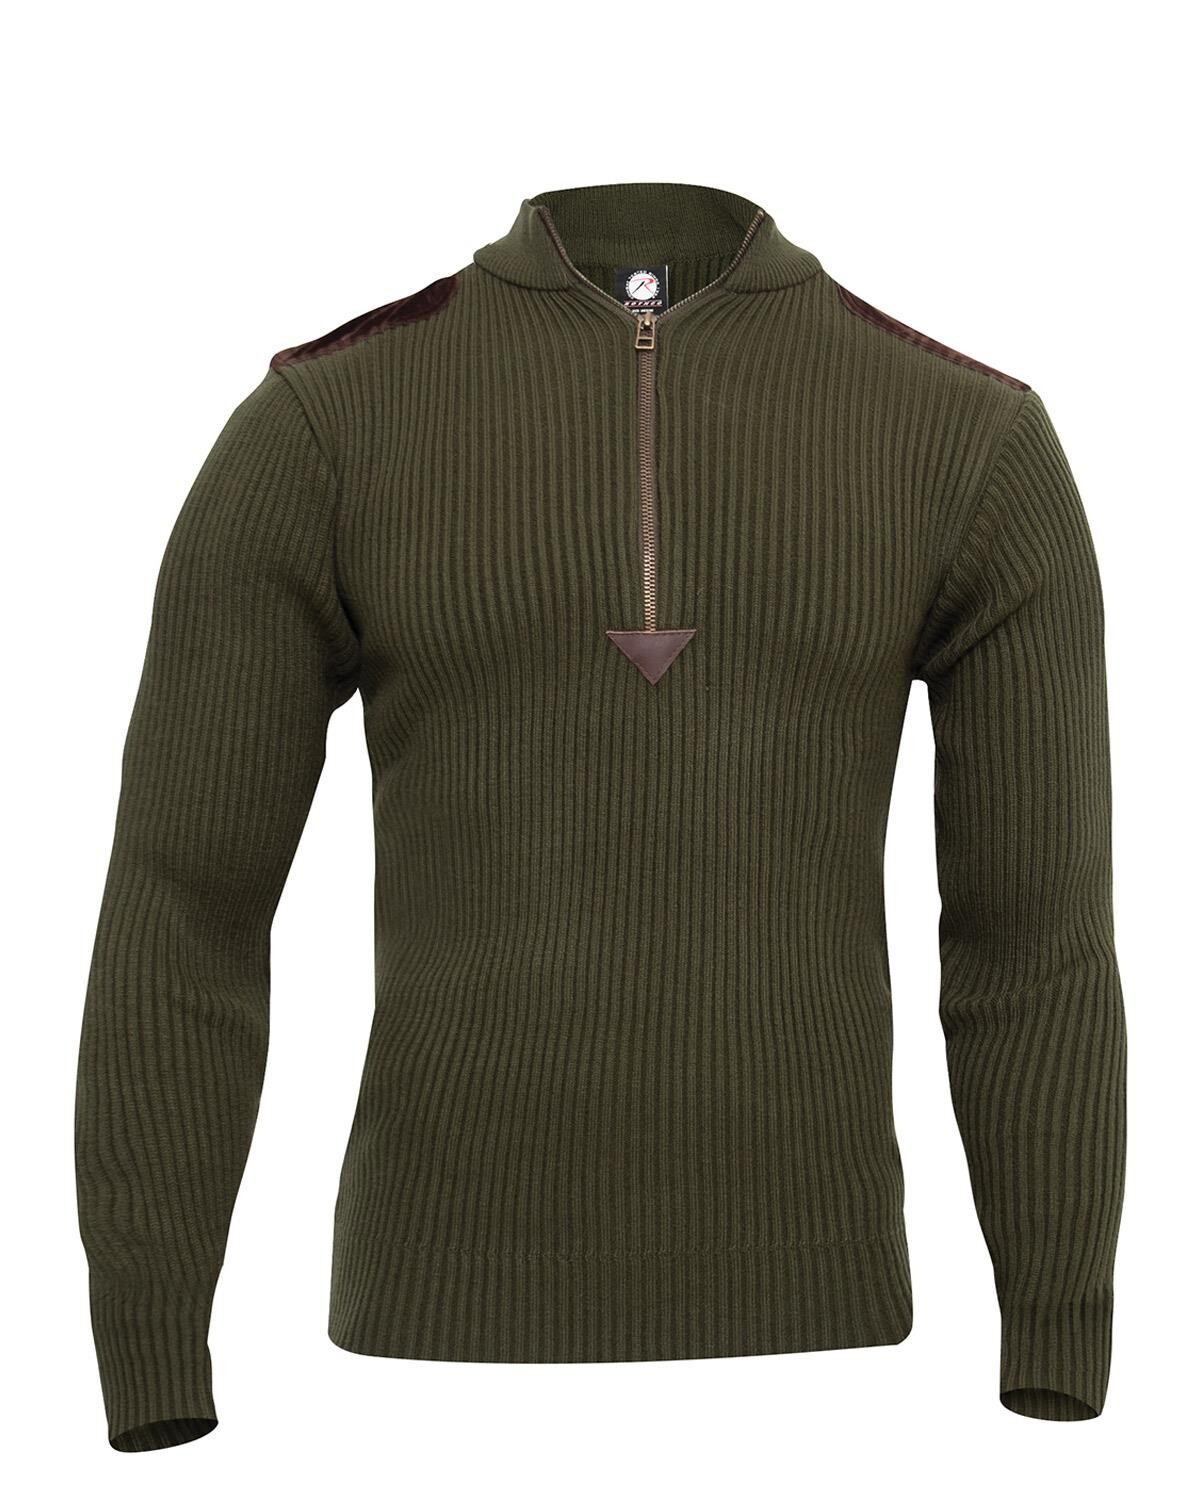 11: Rothco Commando Sweater (Oliven, 3XL)